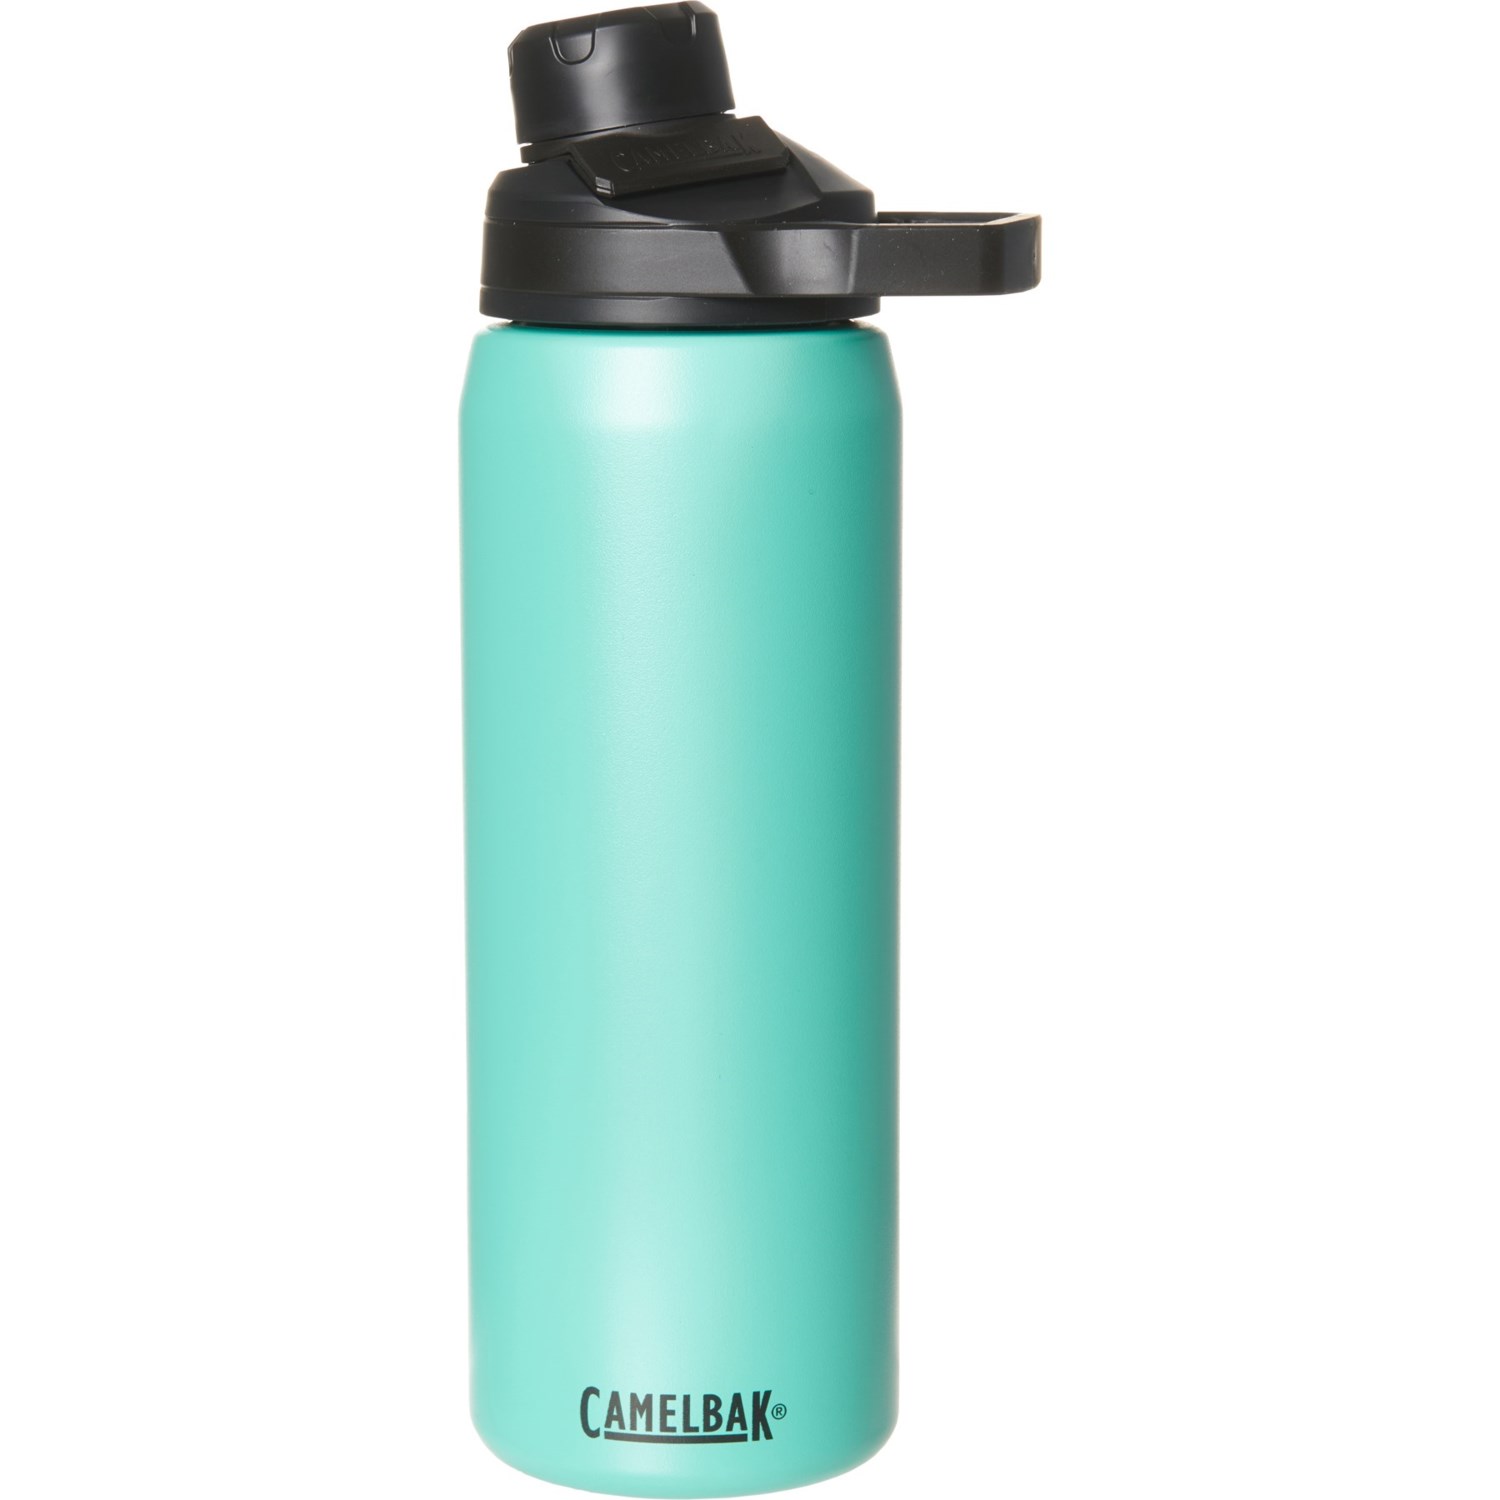 CamelBak Chute Water Bottle - - Save 37%